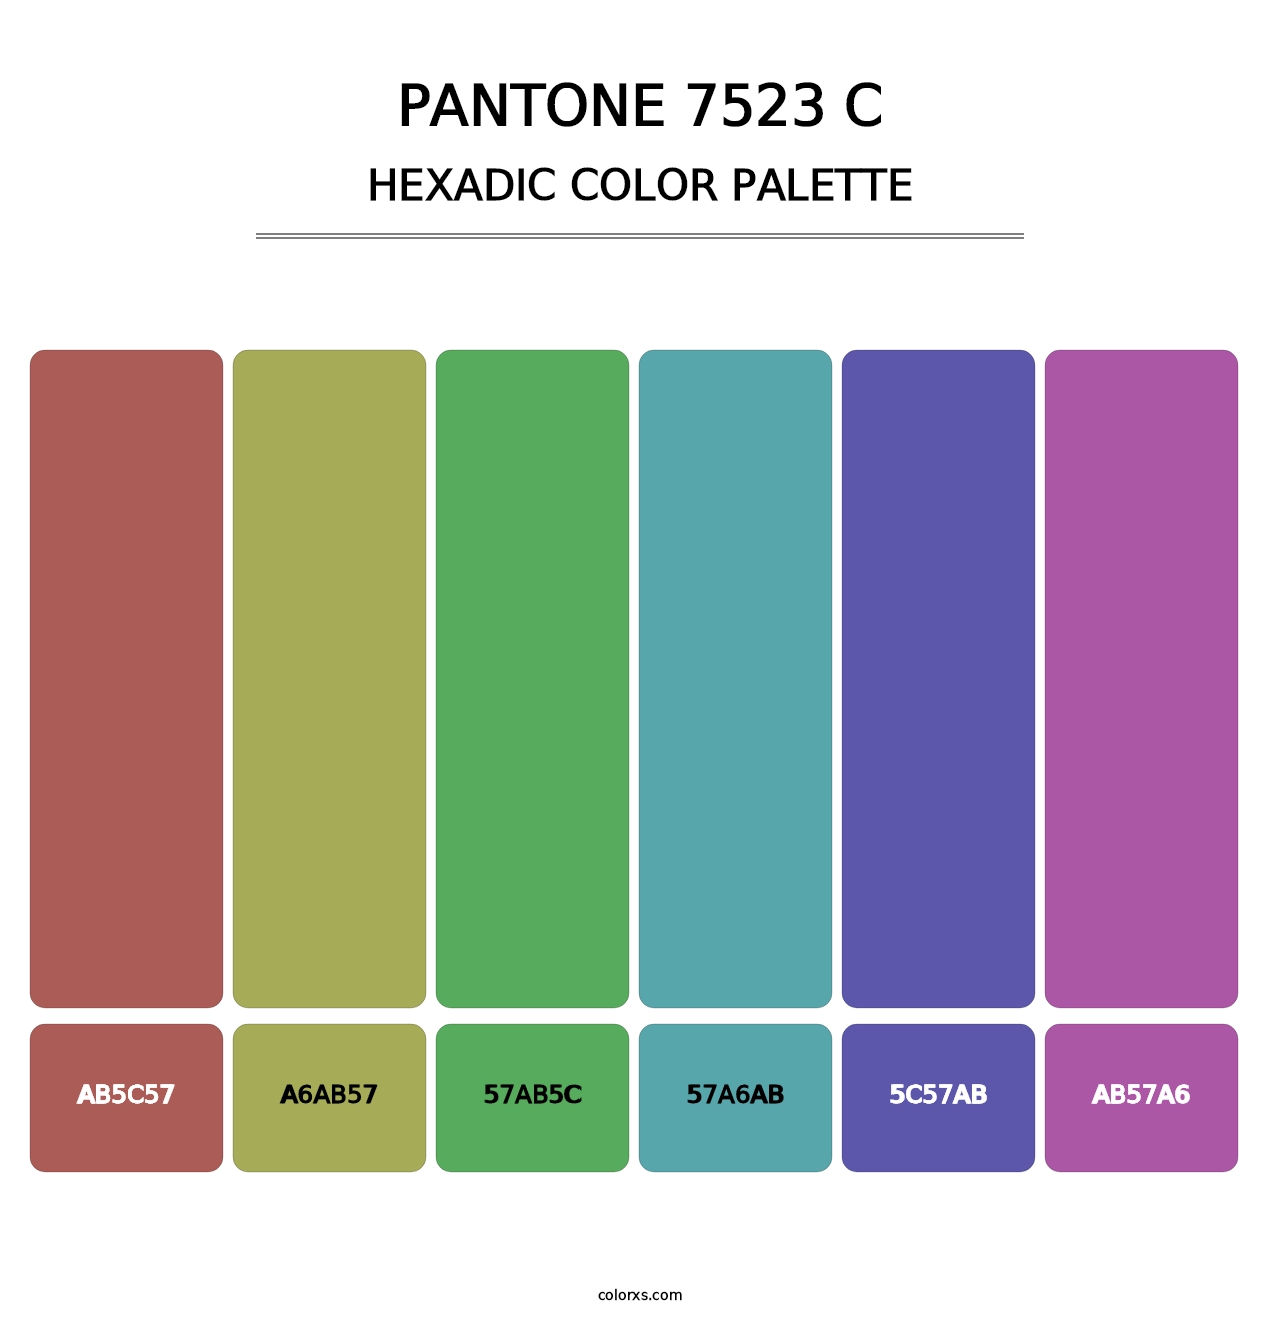 PANTONE 7523 C - Hexadic Color Palette